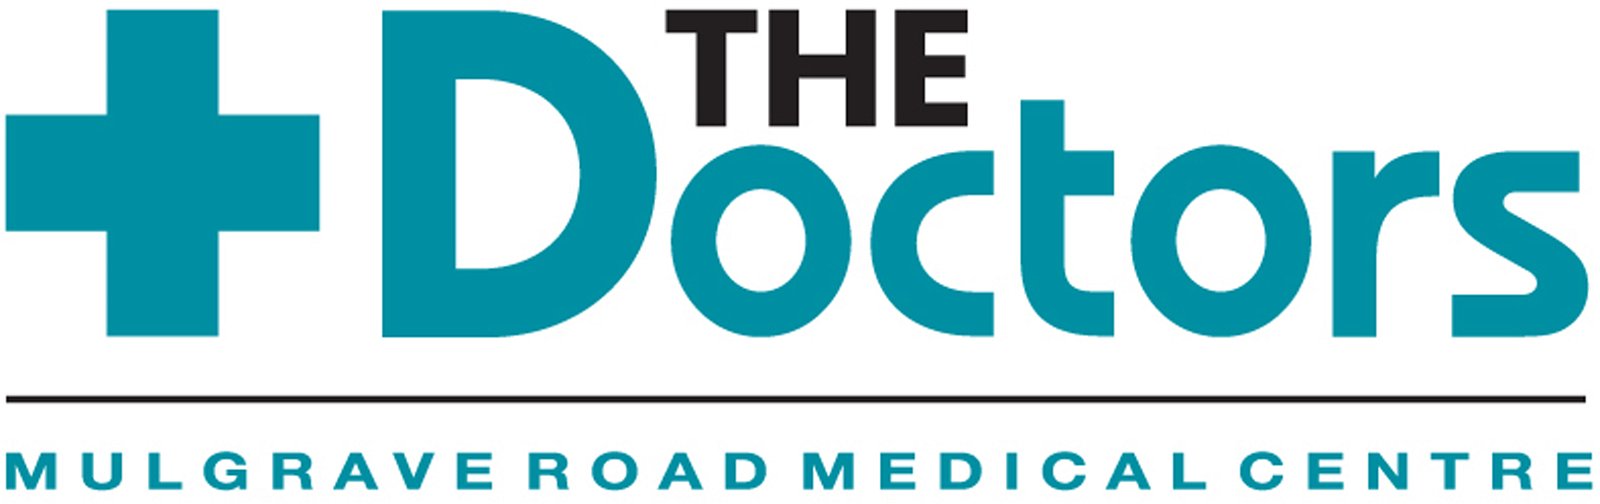 The Doctors Mulgrave Road Medical Centre